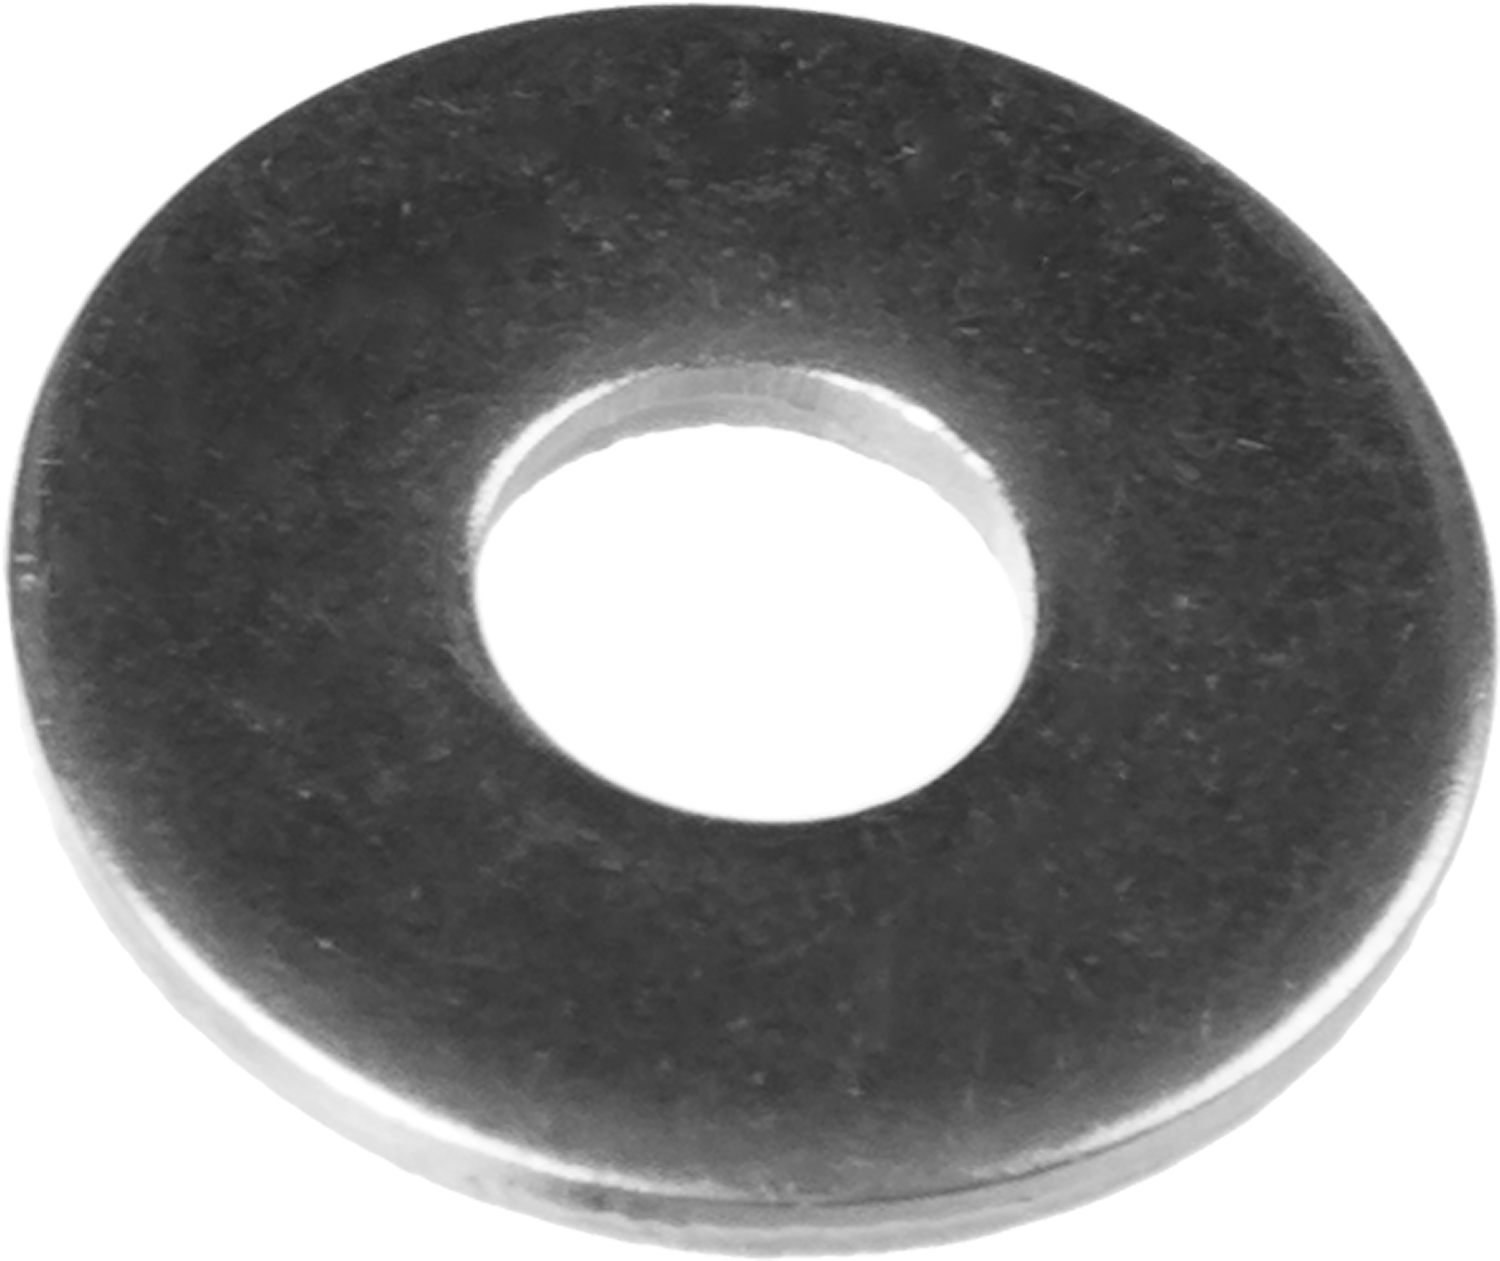 Шайба кузовная Зубр, 9021 DIN, 3 мм, оцинкованная сталь, фасовка 5 кг (303820-03)